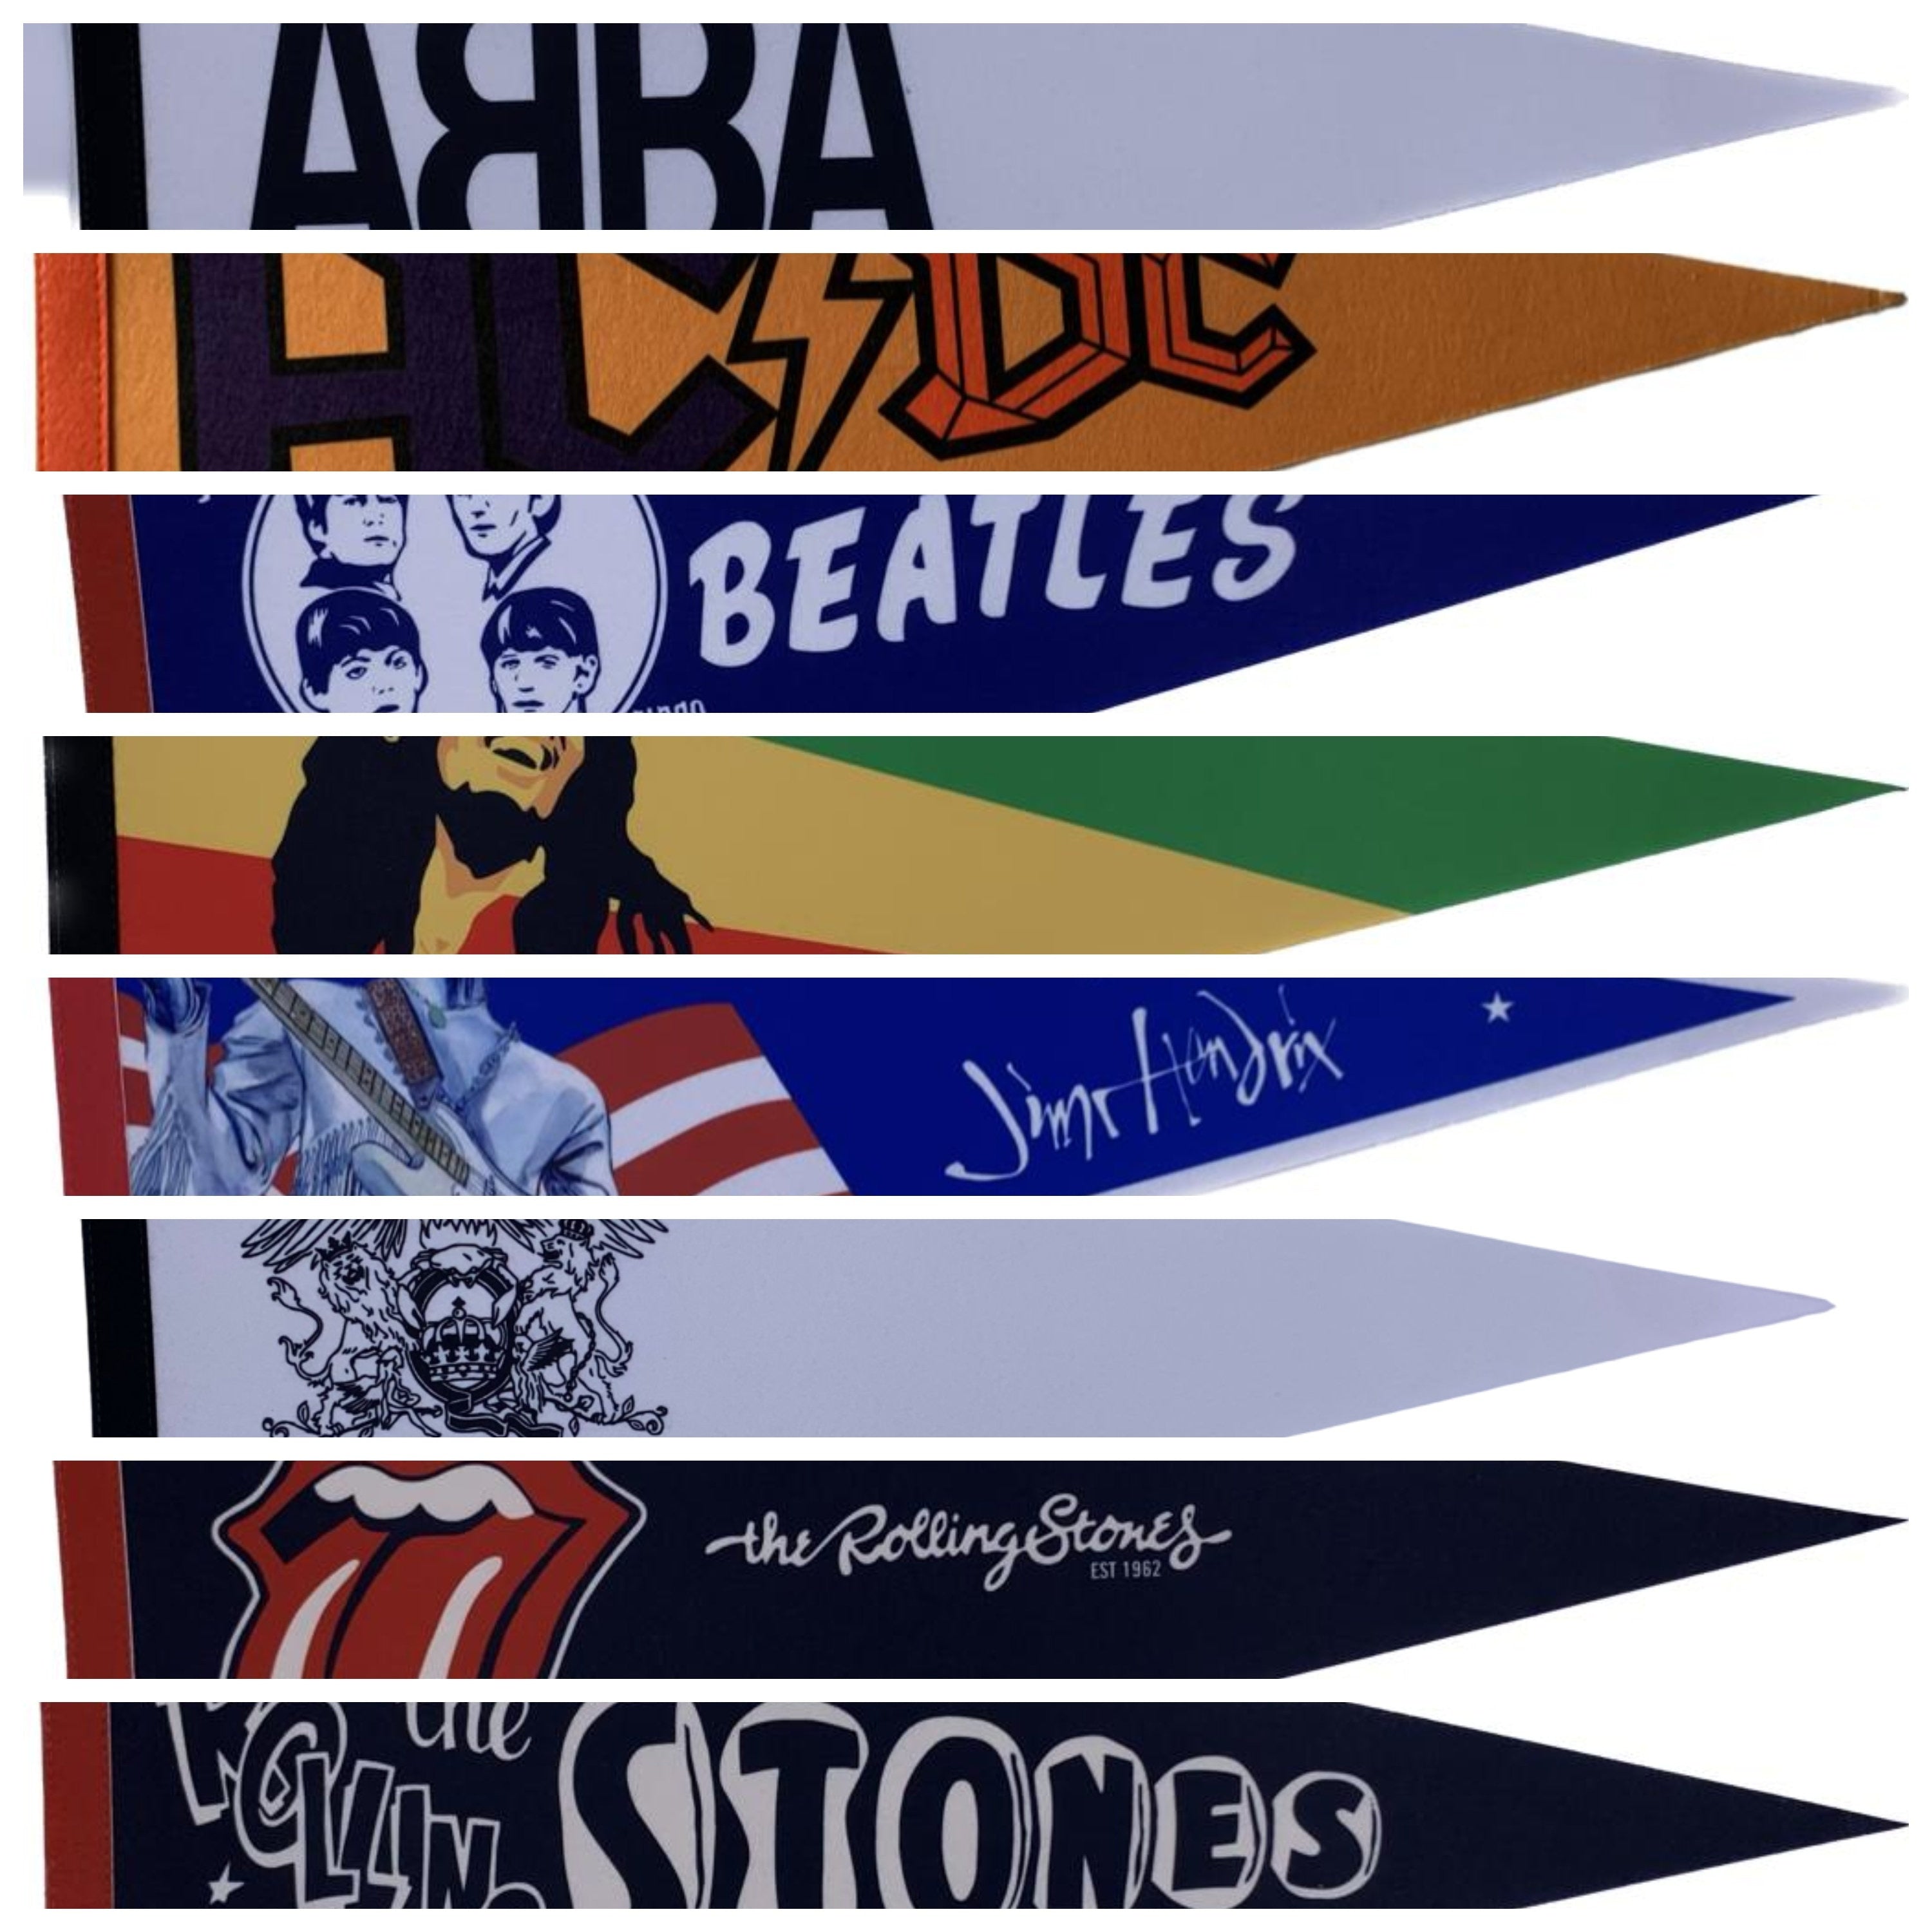 The Beatles UK Music collectibles vintage pennants vaantje vlaggetje vlag vaantje fanion pennant flag rock music finds wall decor beatles - Beatles Heads